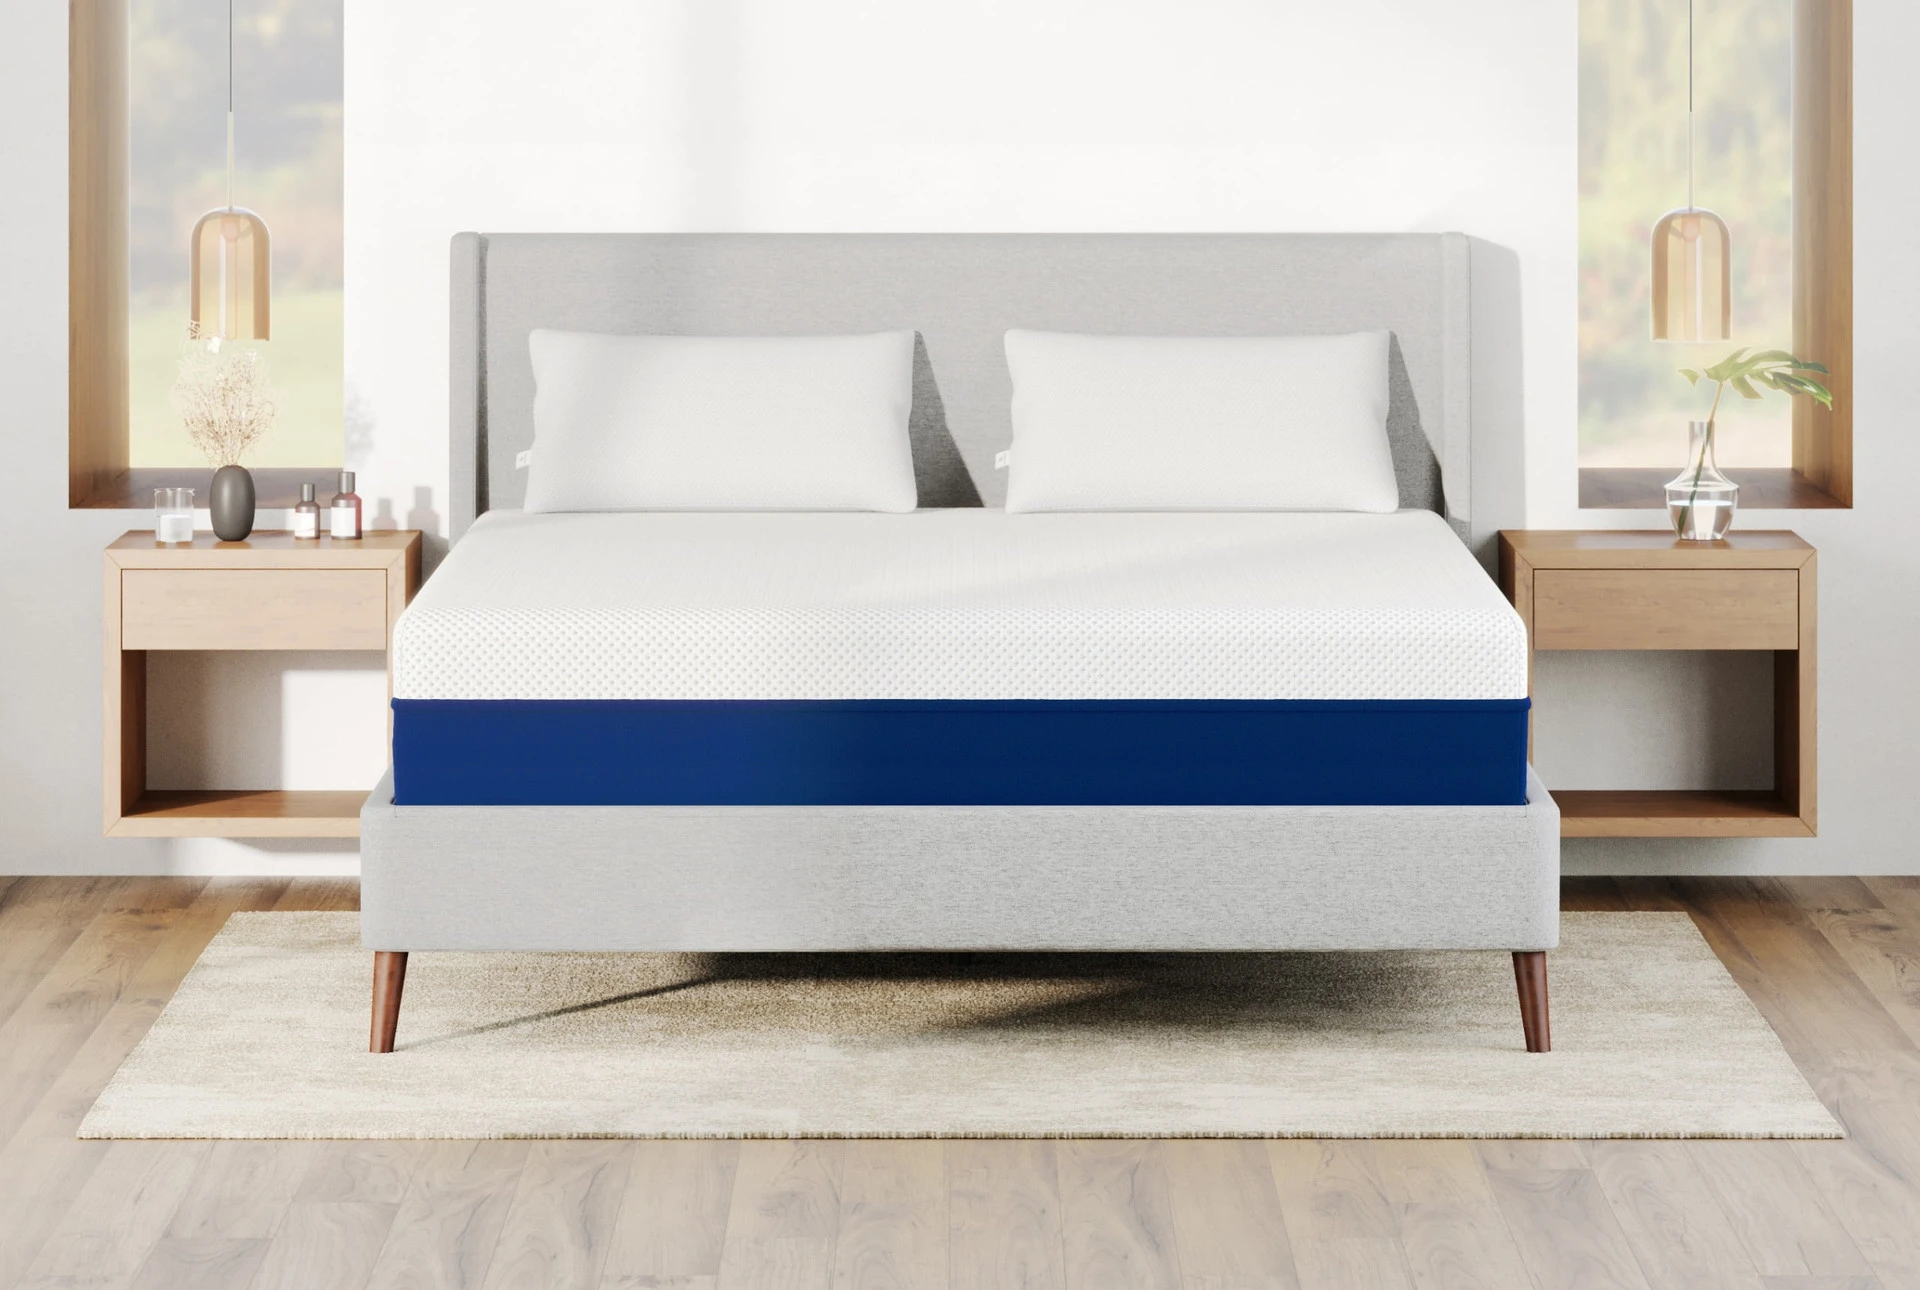 Amerisleep AS2 mattress